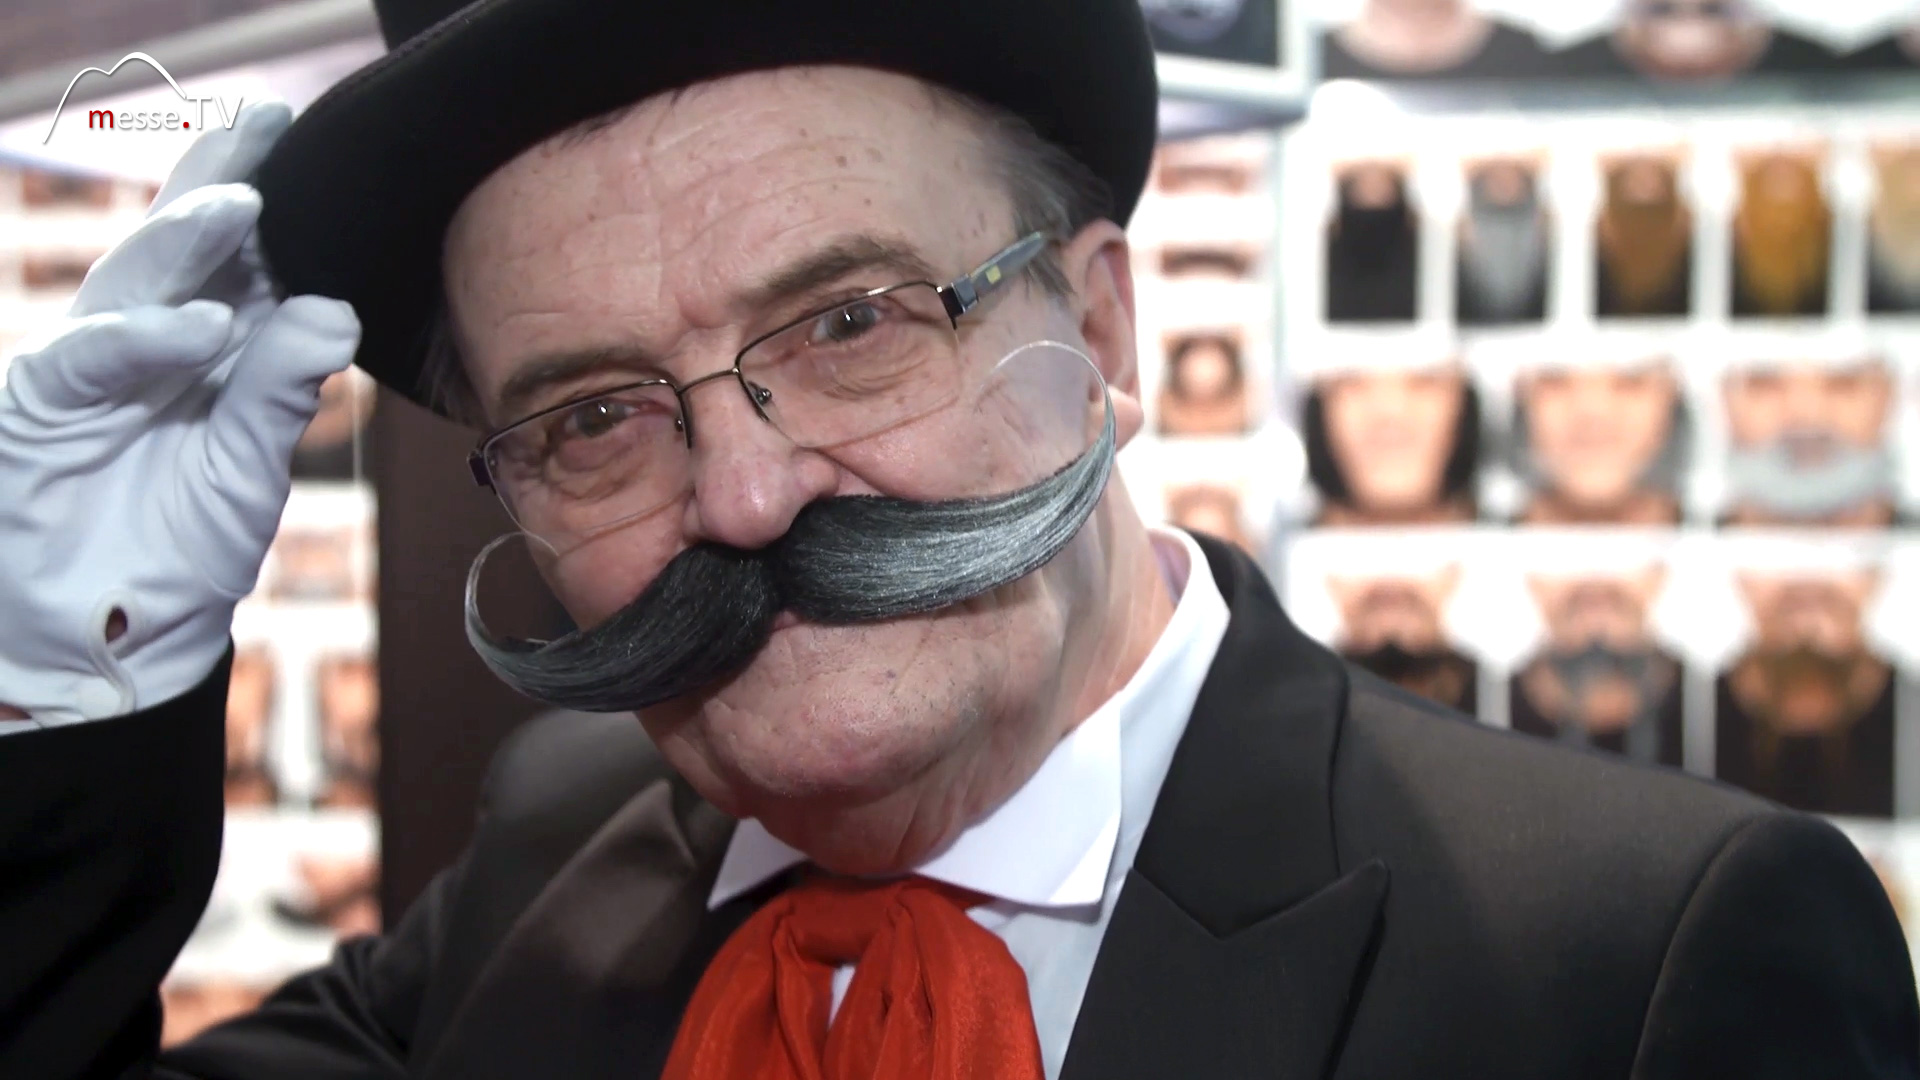 Mustaches mustache carnival beard Spielwarenmesse Nuremberg